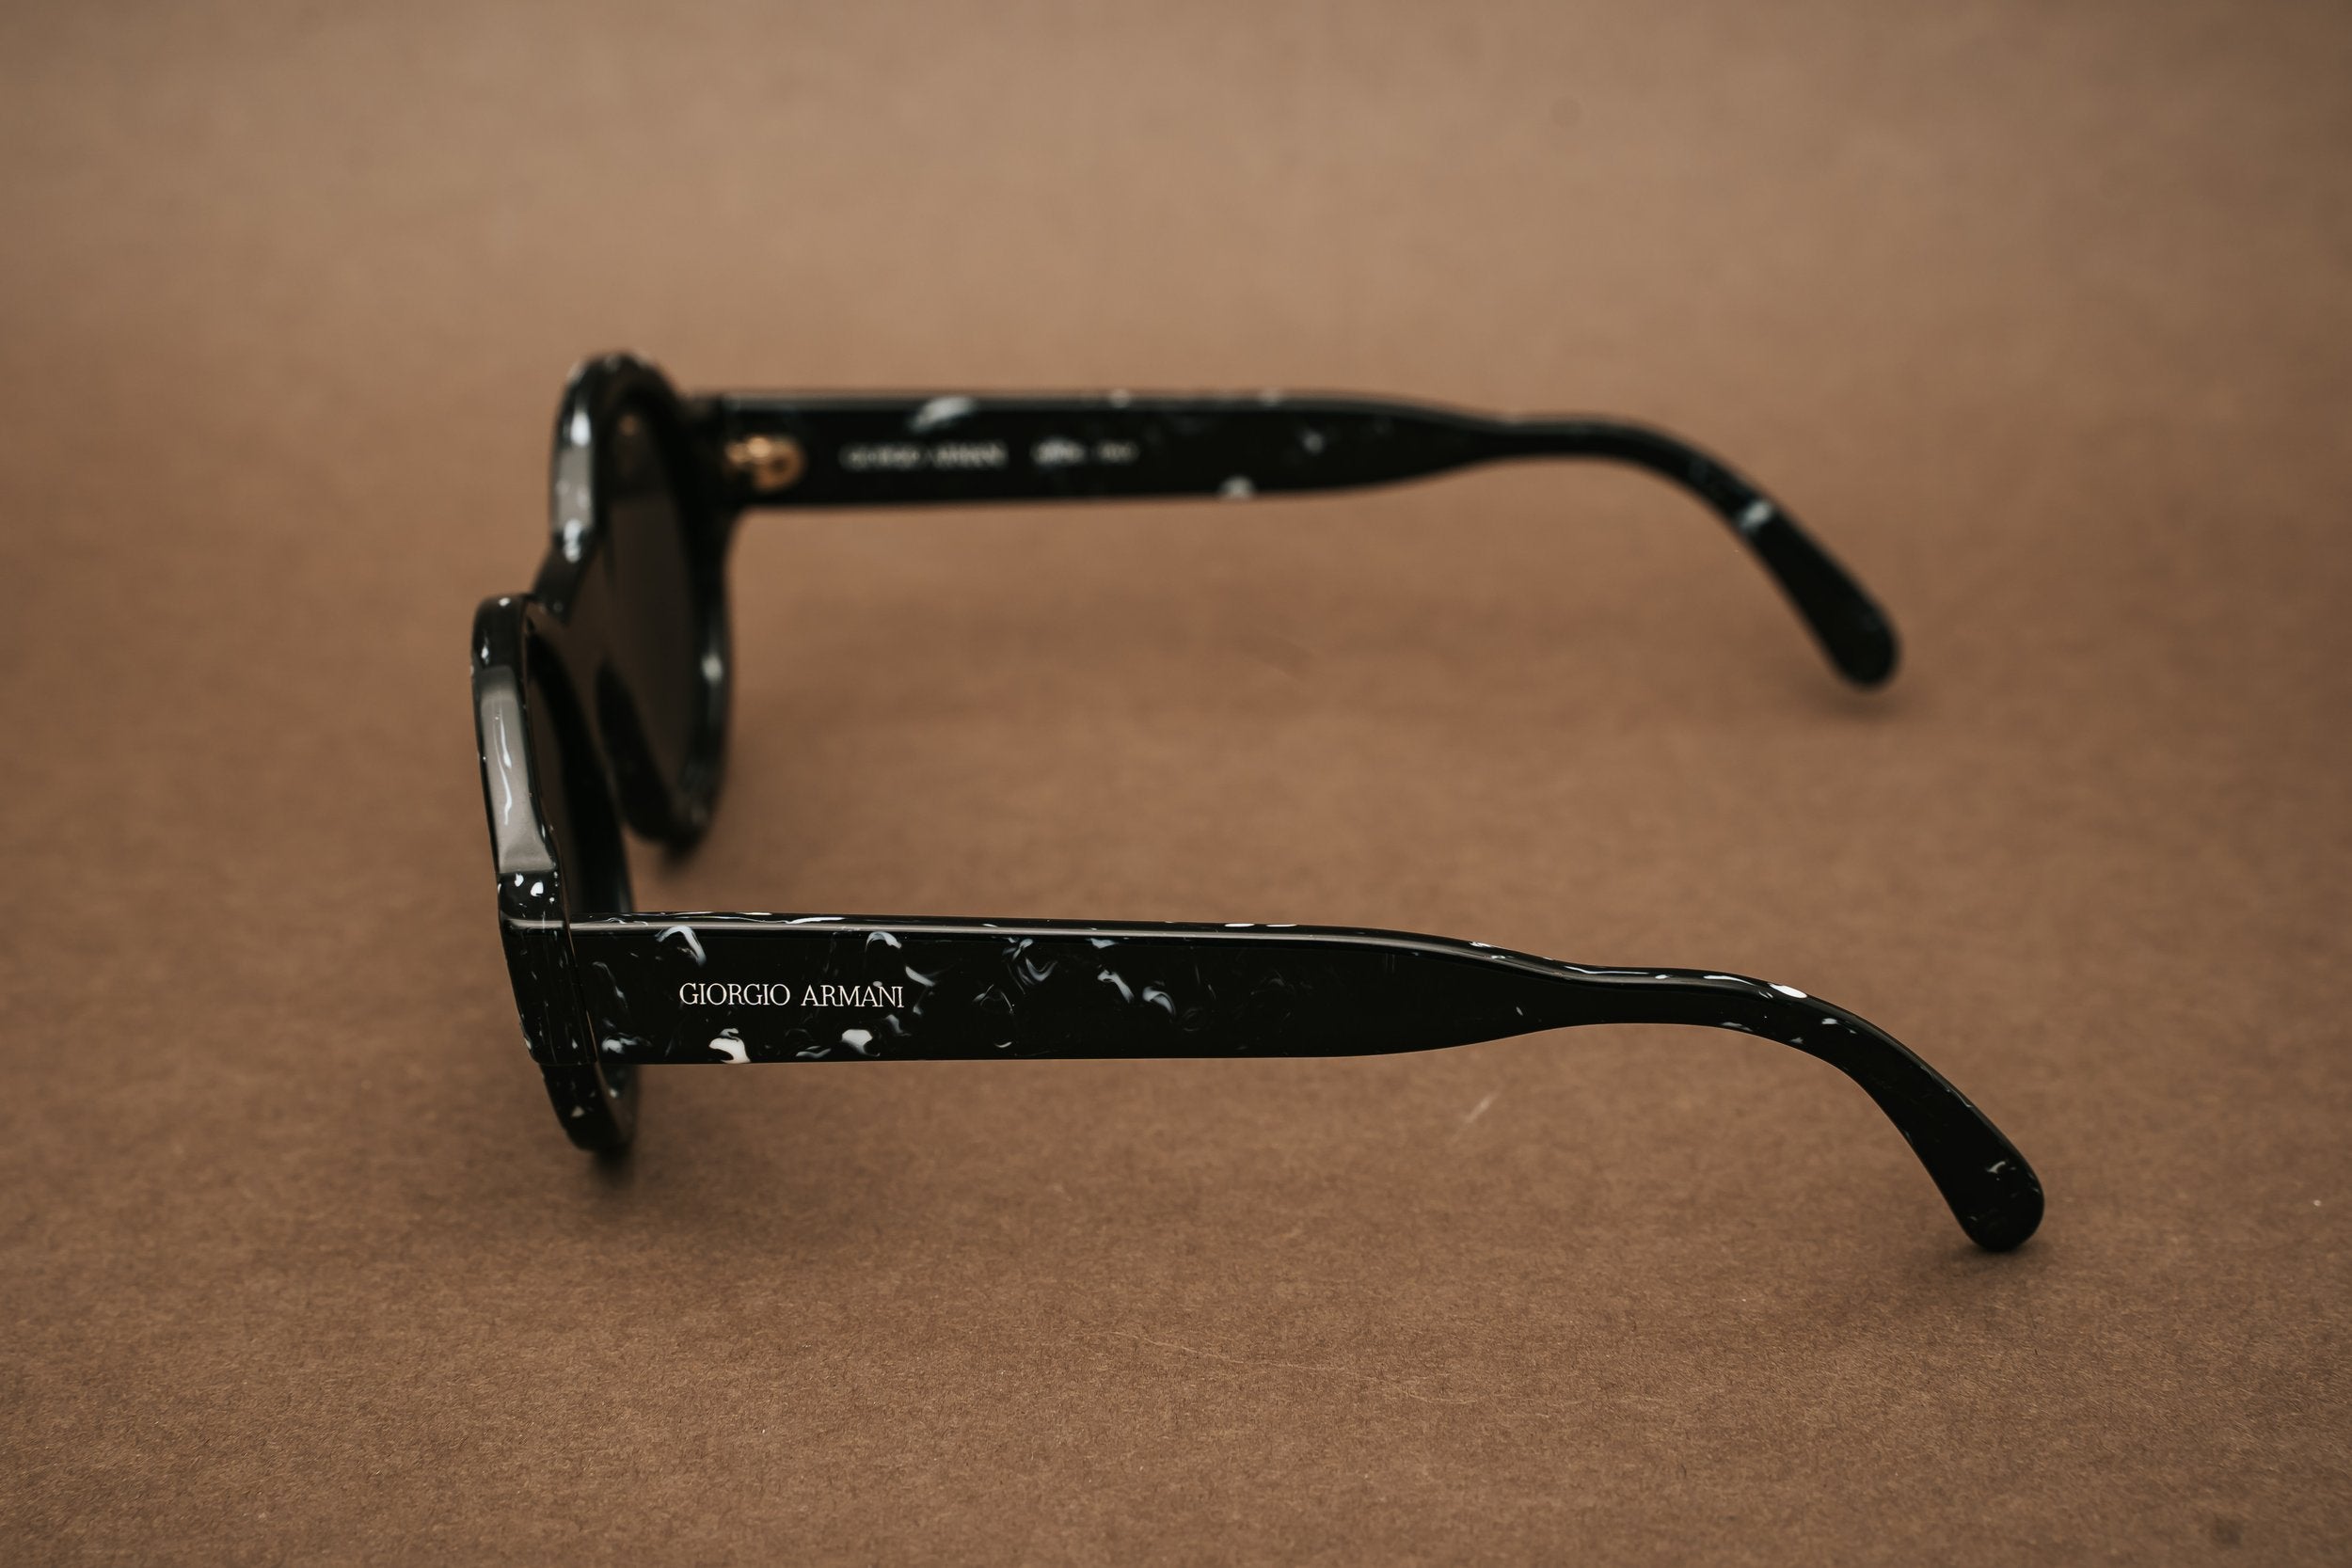 Giorgio Armani 903 sunglasses